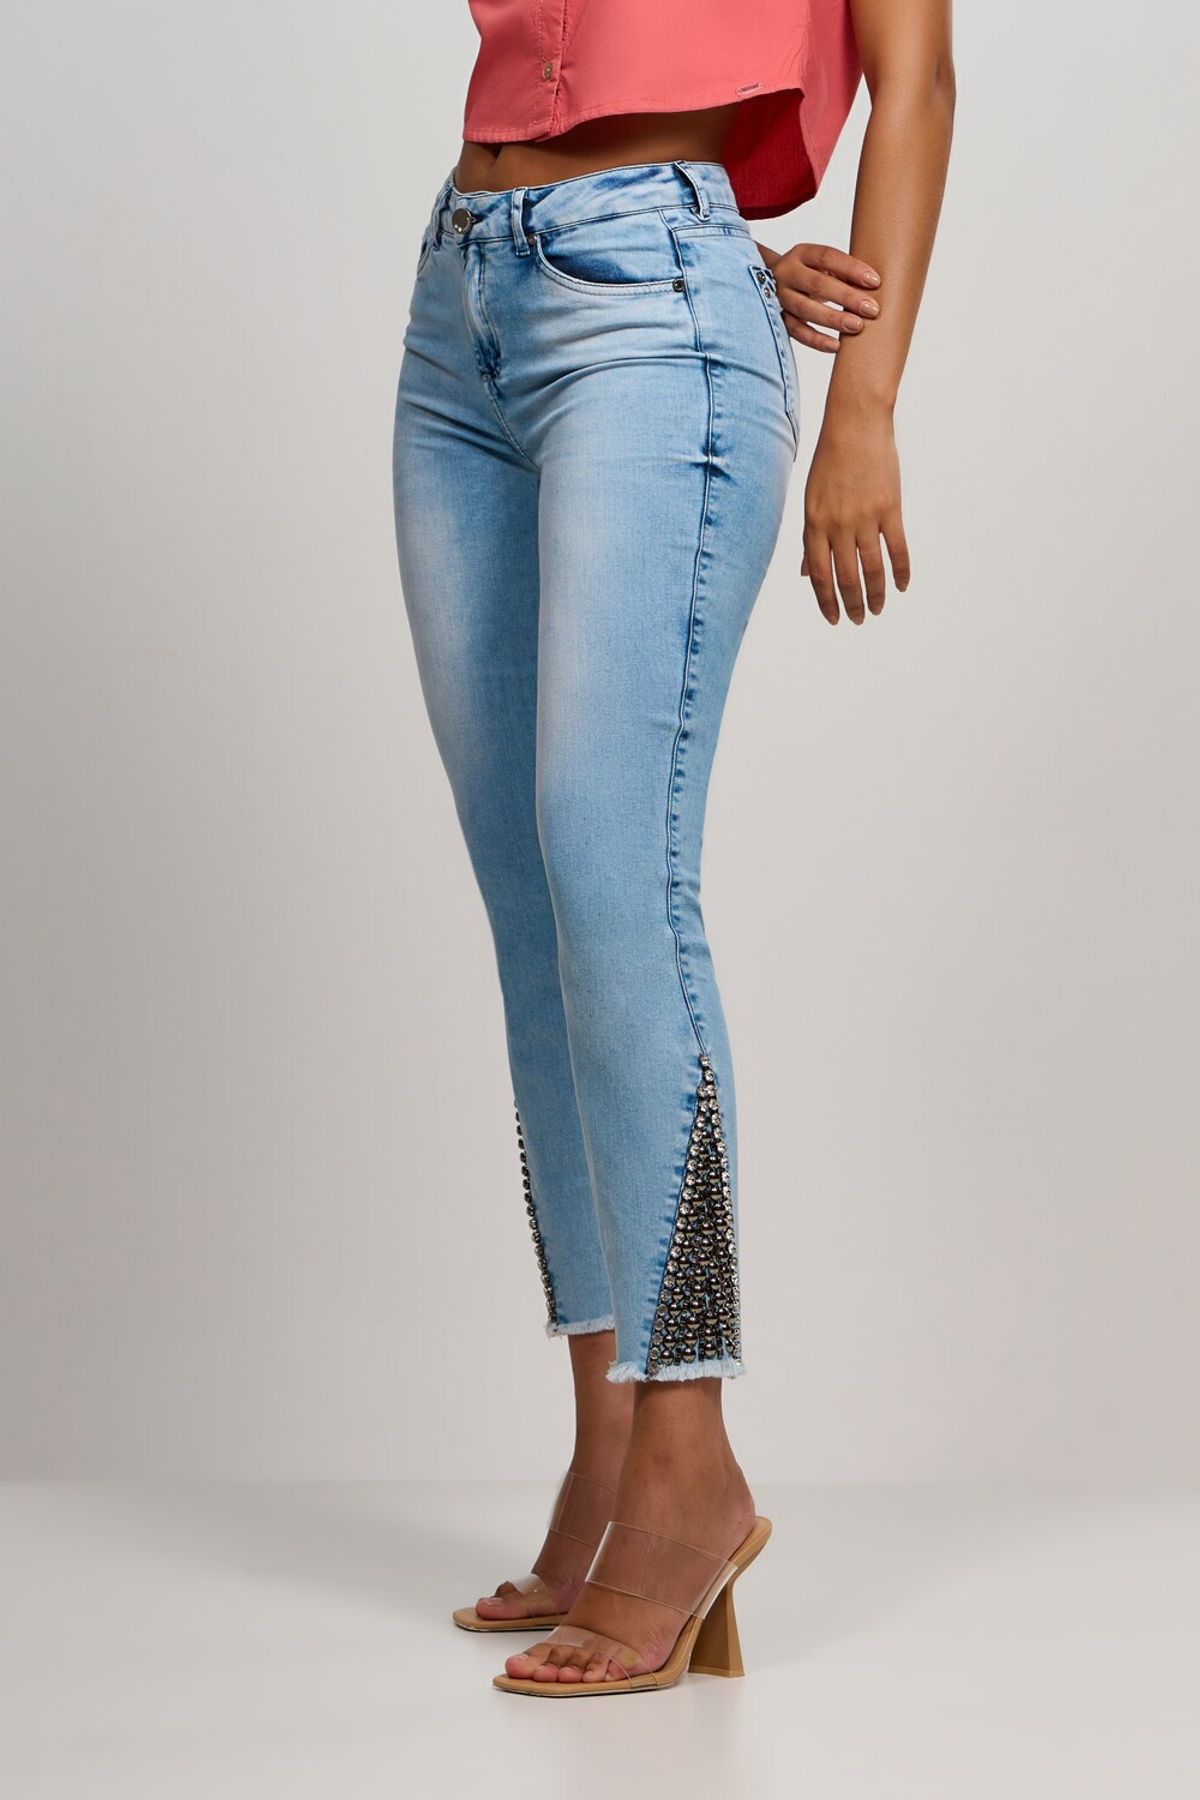 Calça Patogê feminina skinny jeans cintura média (G3) CL37271